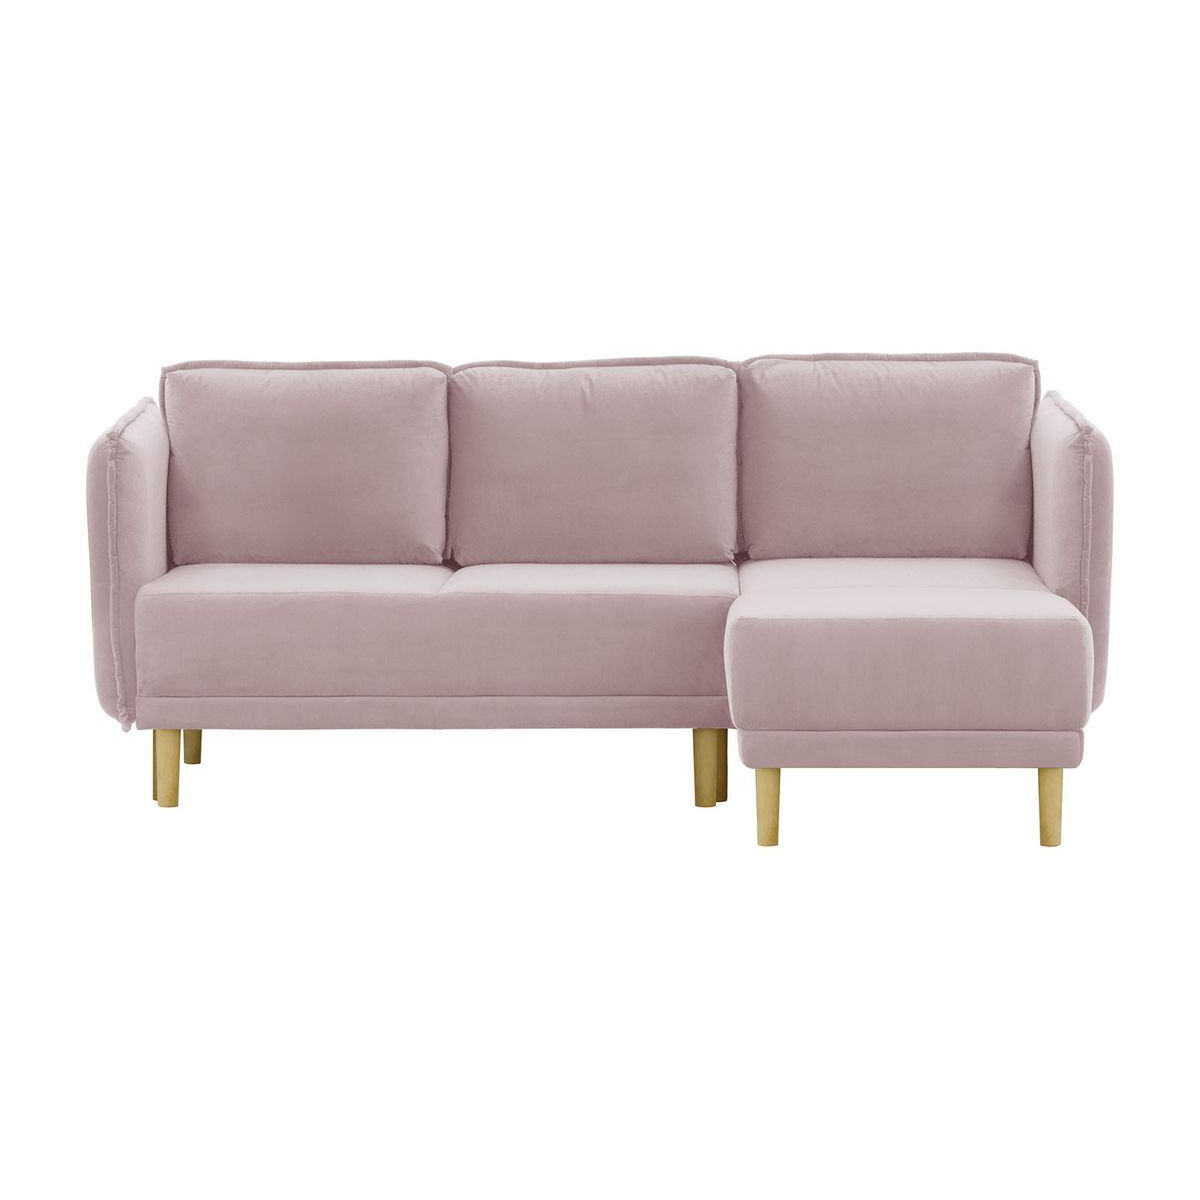 Swift Corner Sofa Bed, lilac - image 1